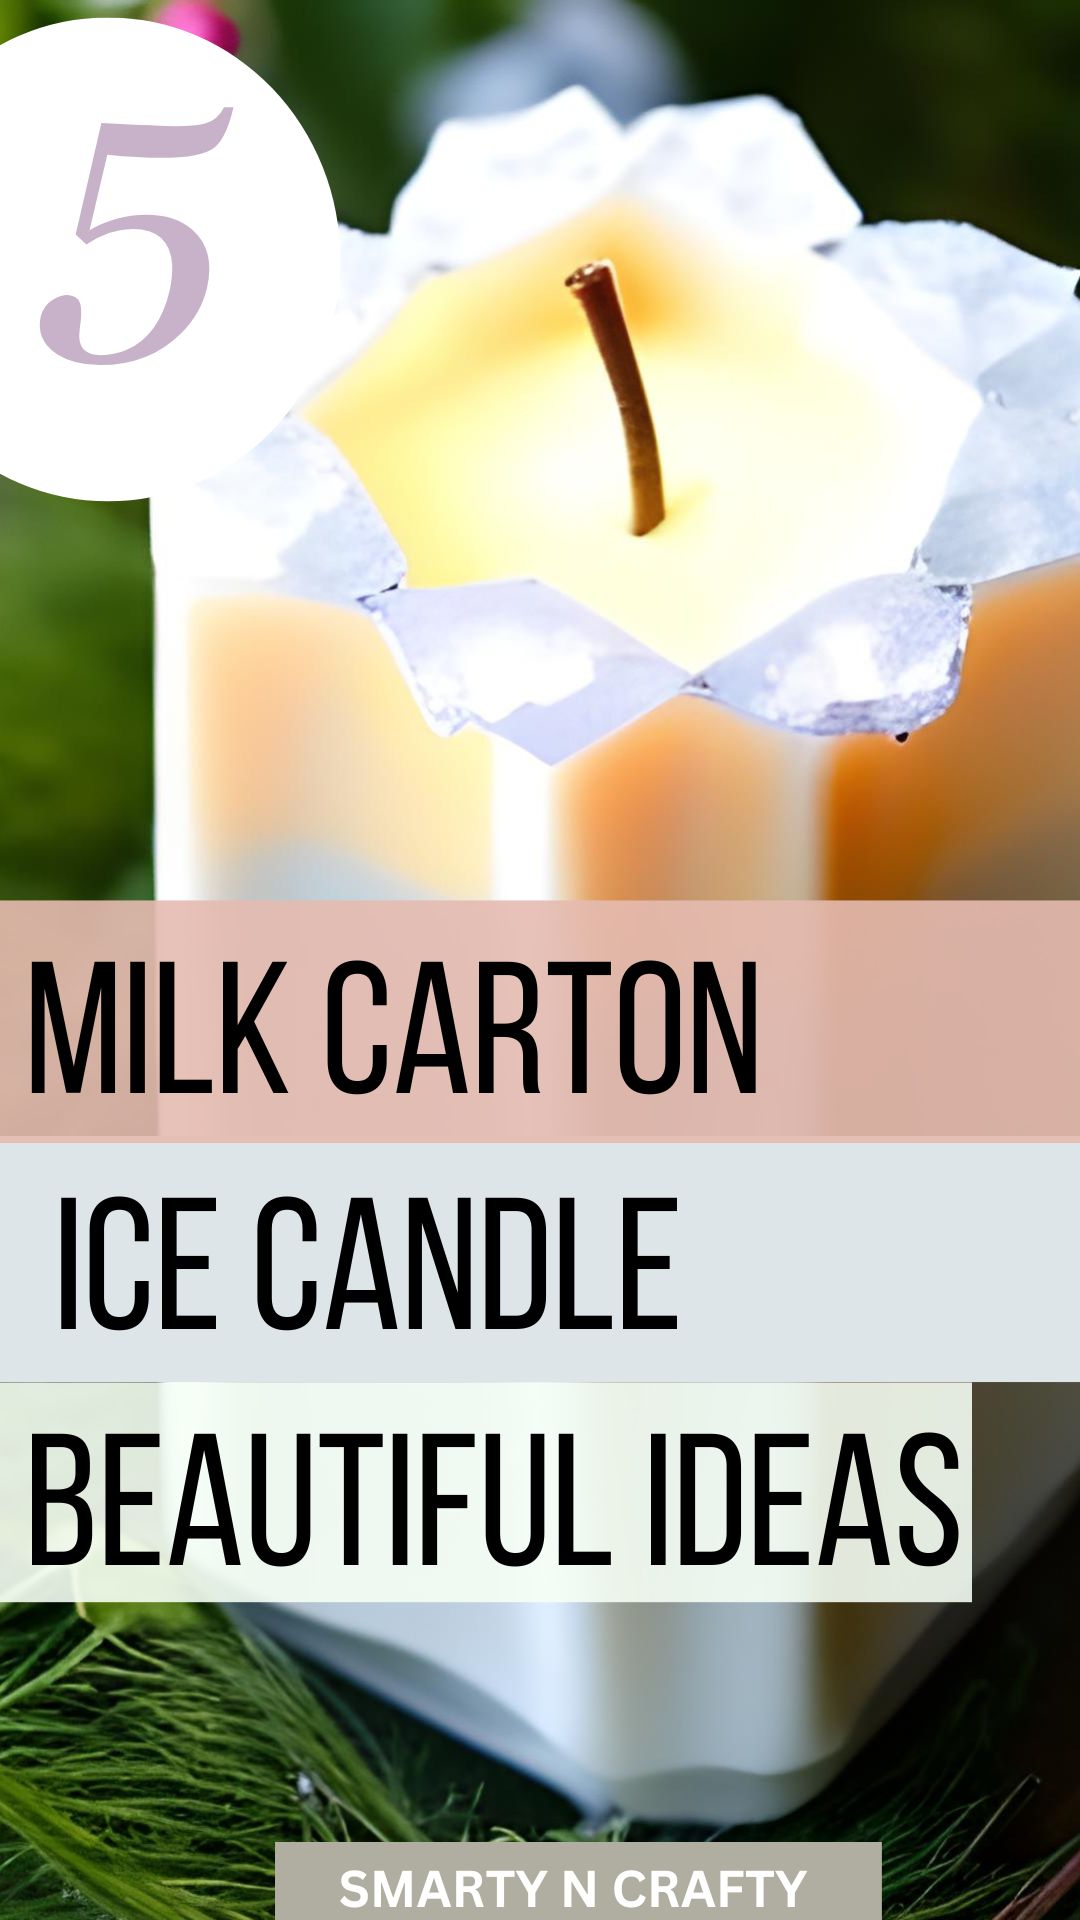 Milk Carton Ice Candles